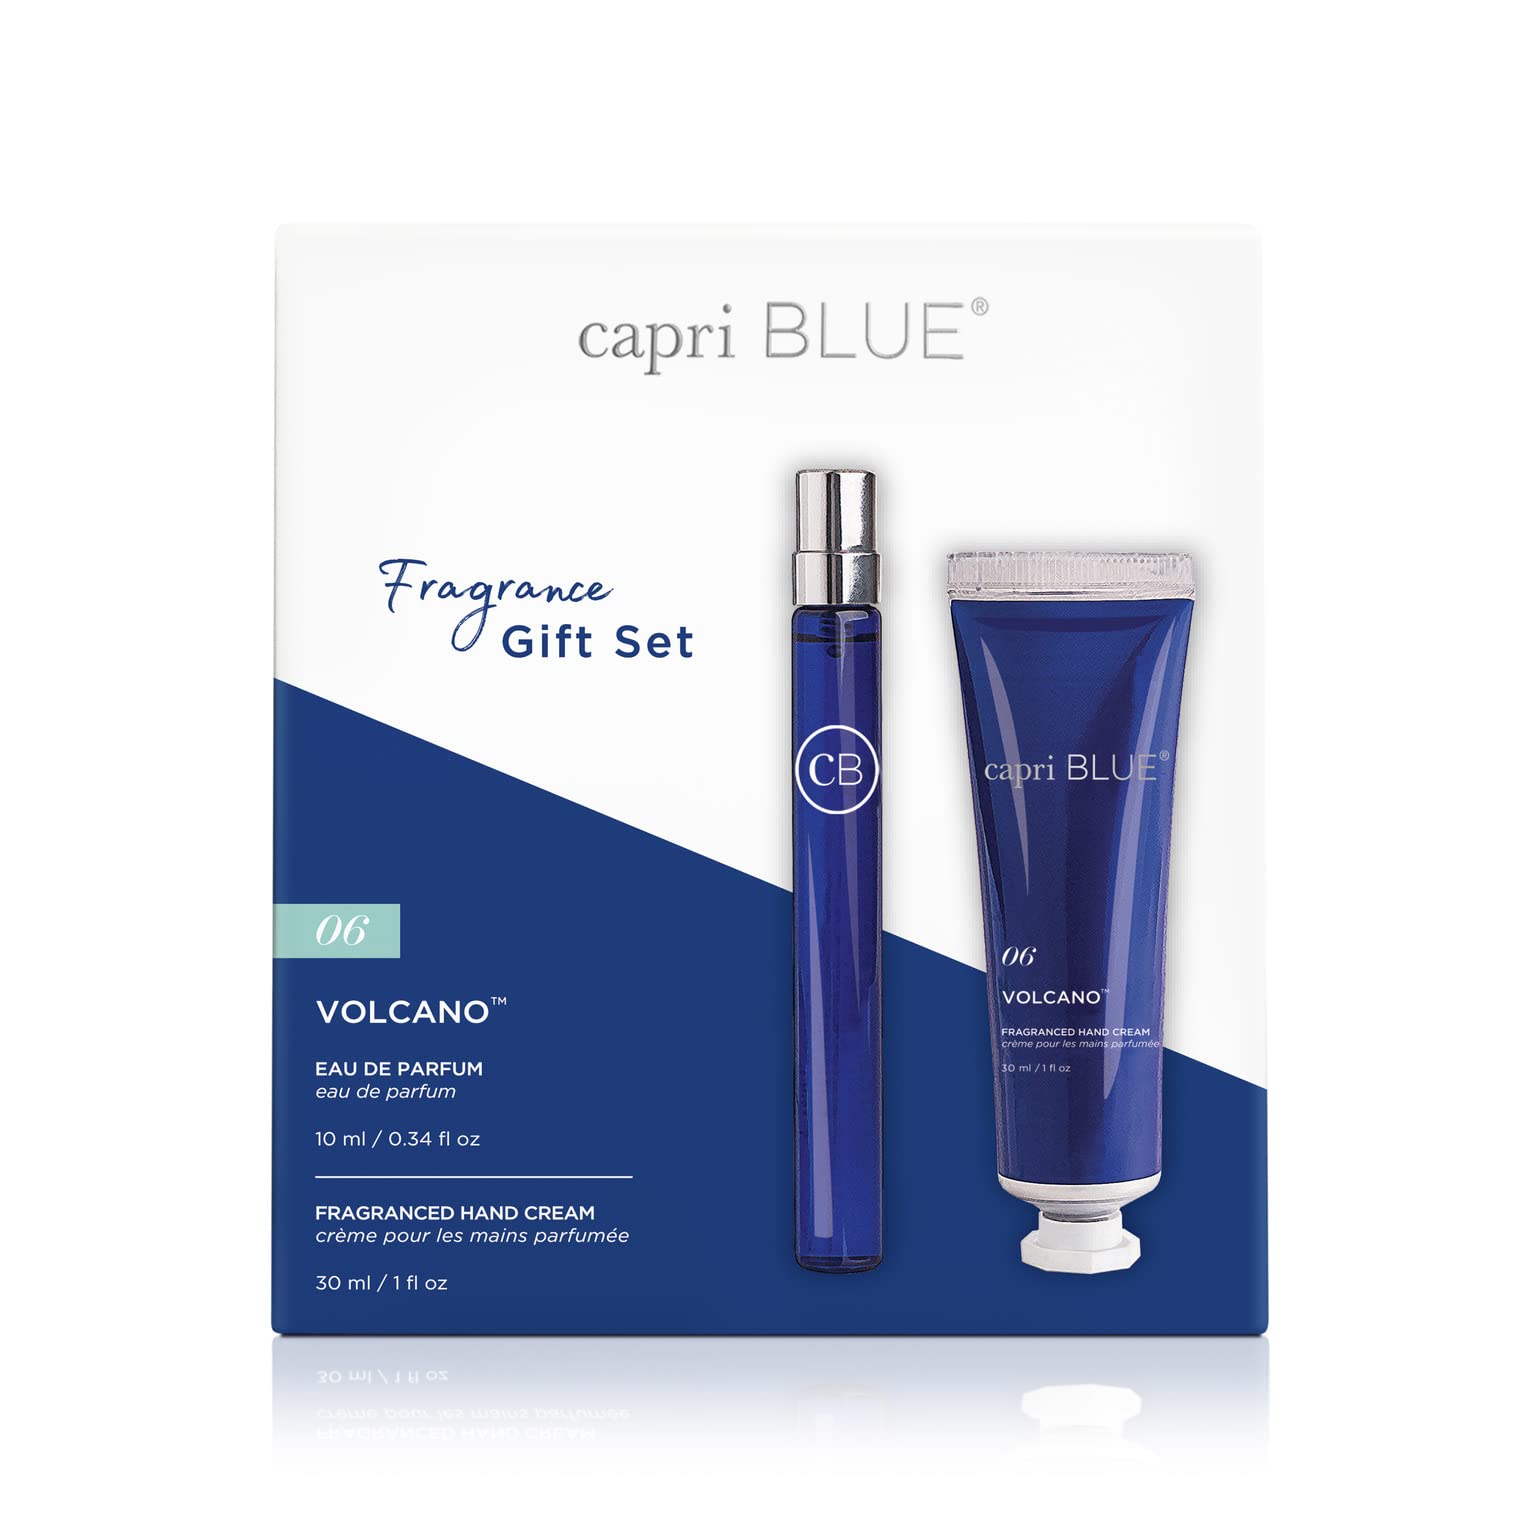 Capri Blue Fragrance Gift Set - 1 Volcano Eau de Parfum .34 fl oz & 1 Volcano Mini Hand Cream 1 oz - Moisturizing Jojoba Oil & Shea Butter Lotion - Cruelty-Free Skin Care Products - No Sulfates